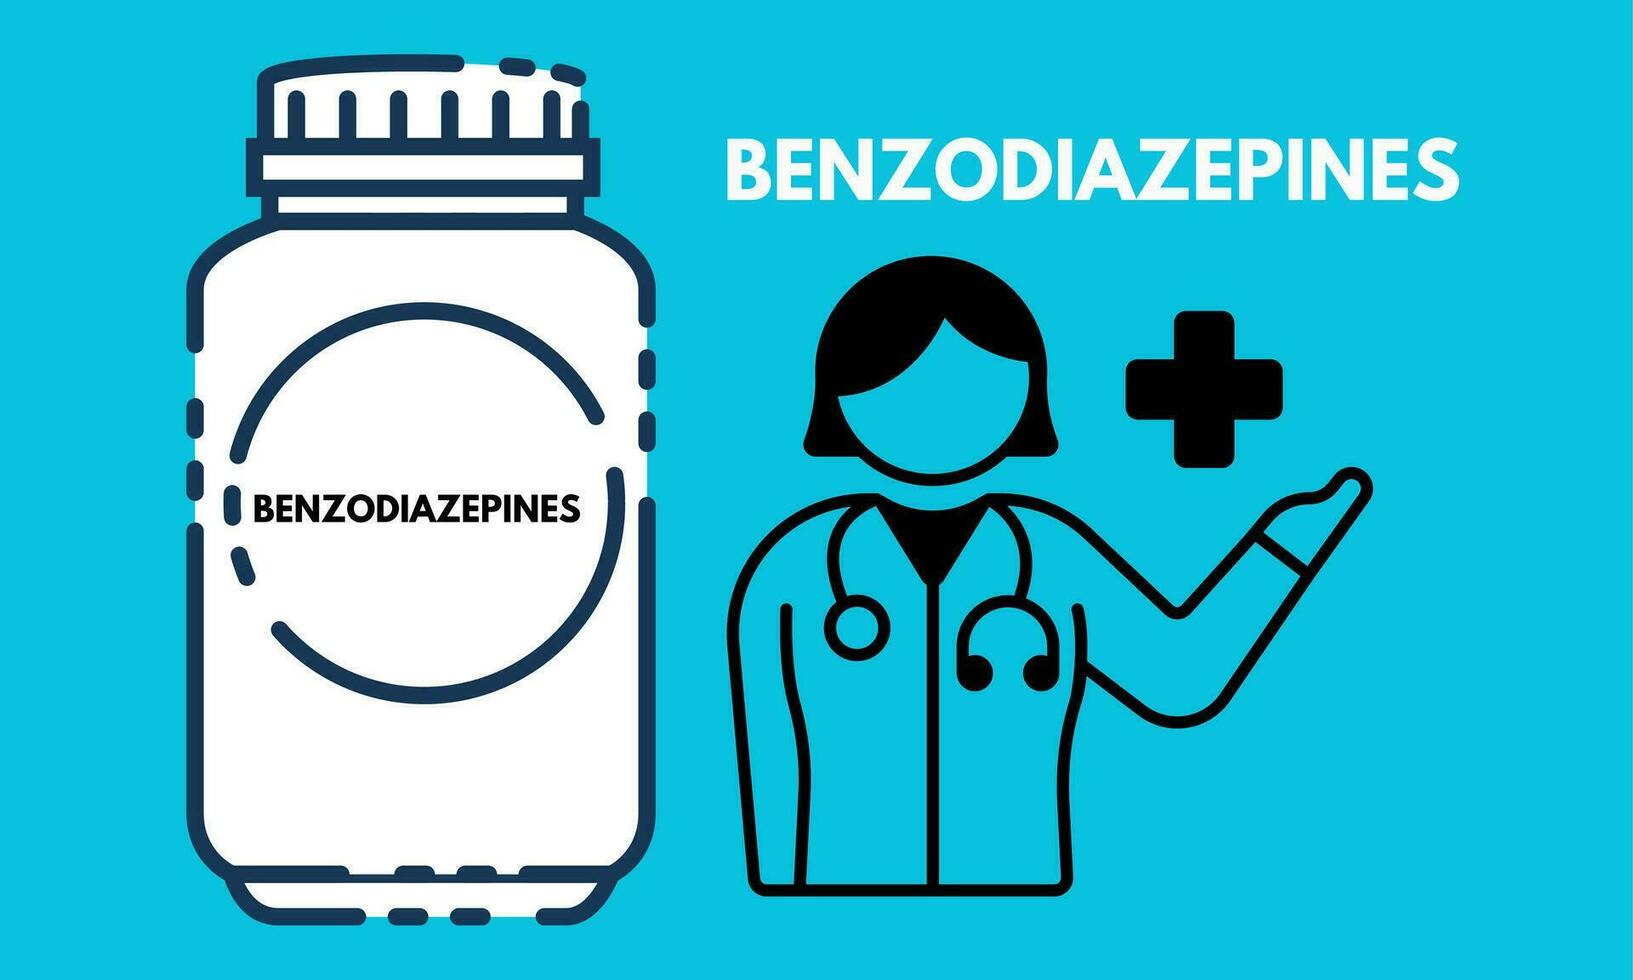 Benzodiazepines. Benzodiazepines pills in RX prescription drug bottle vector illustration